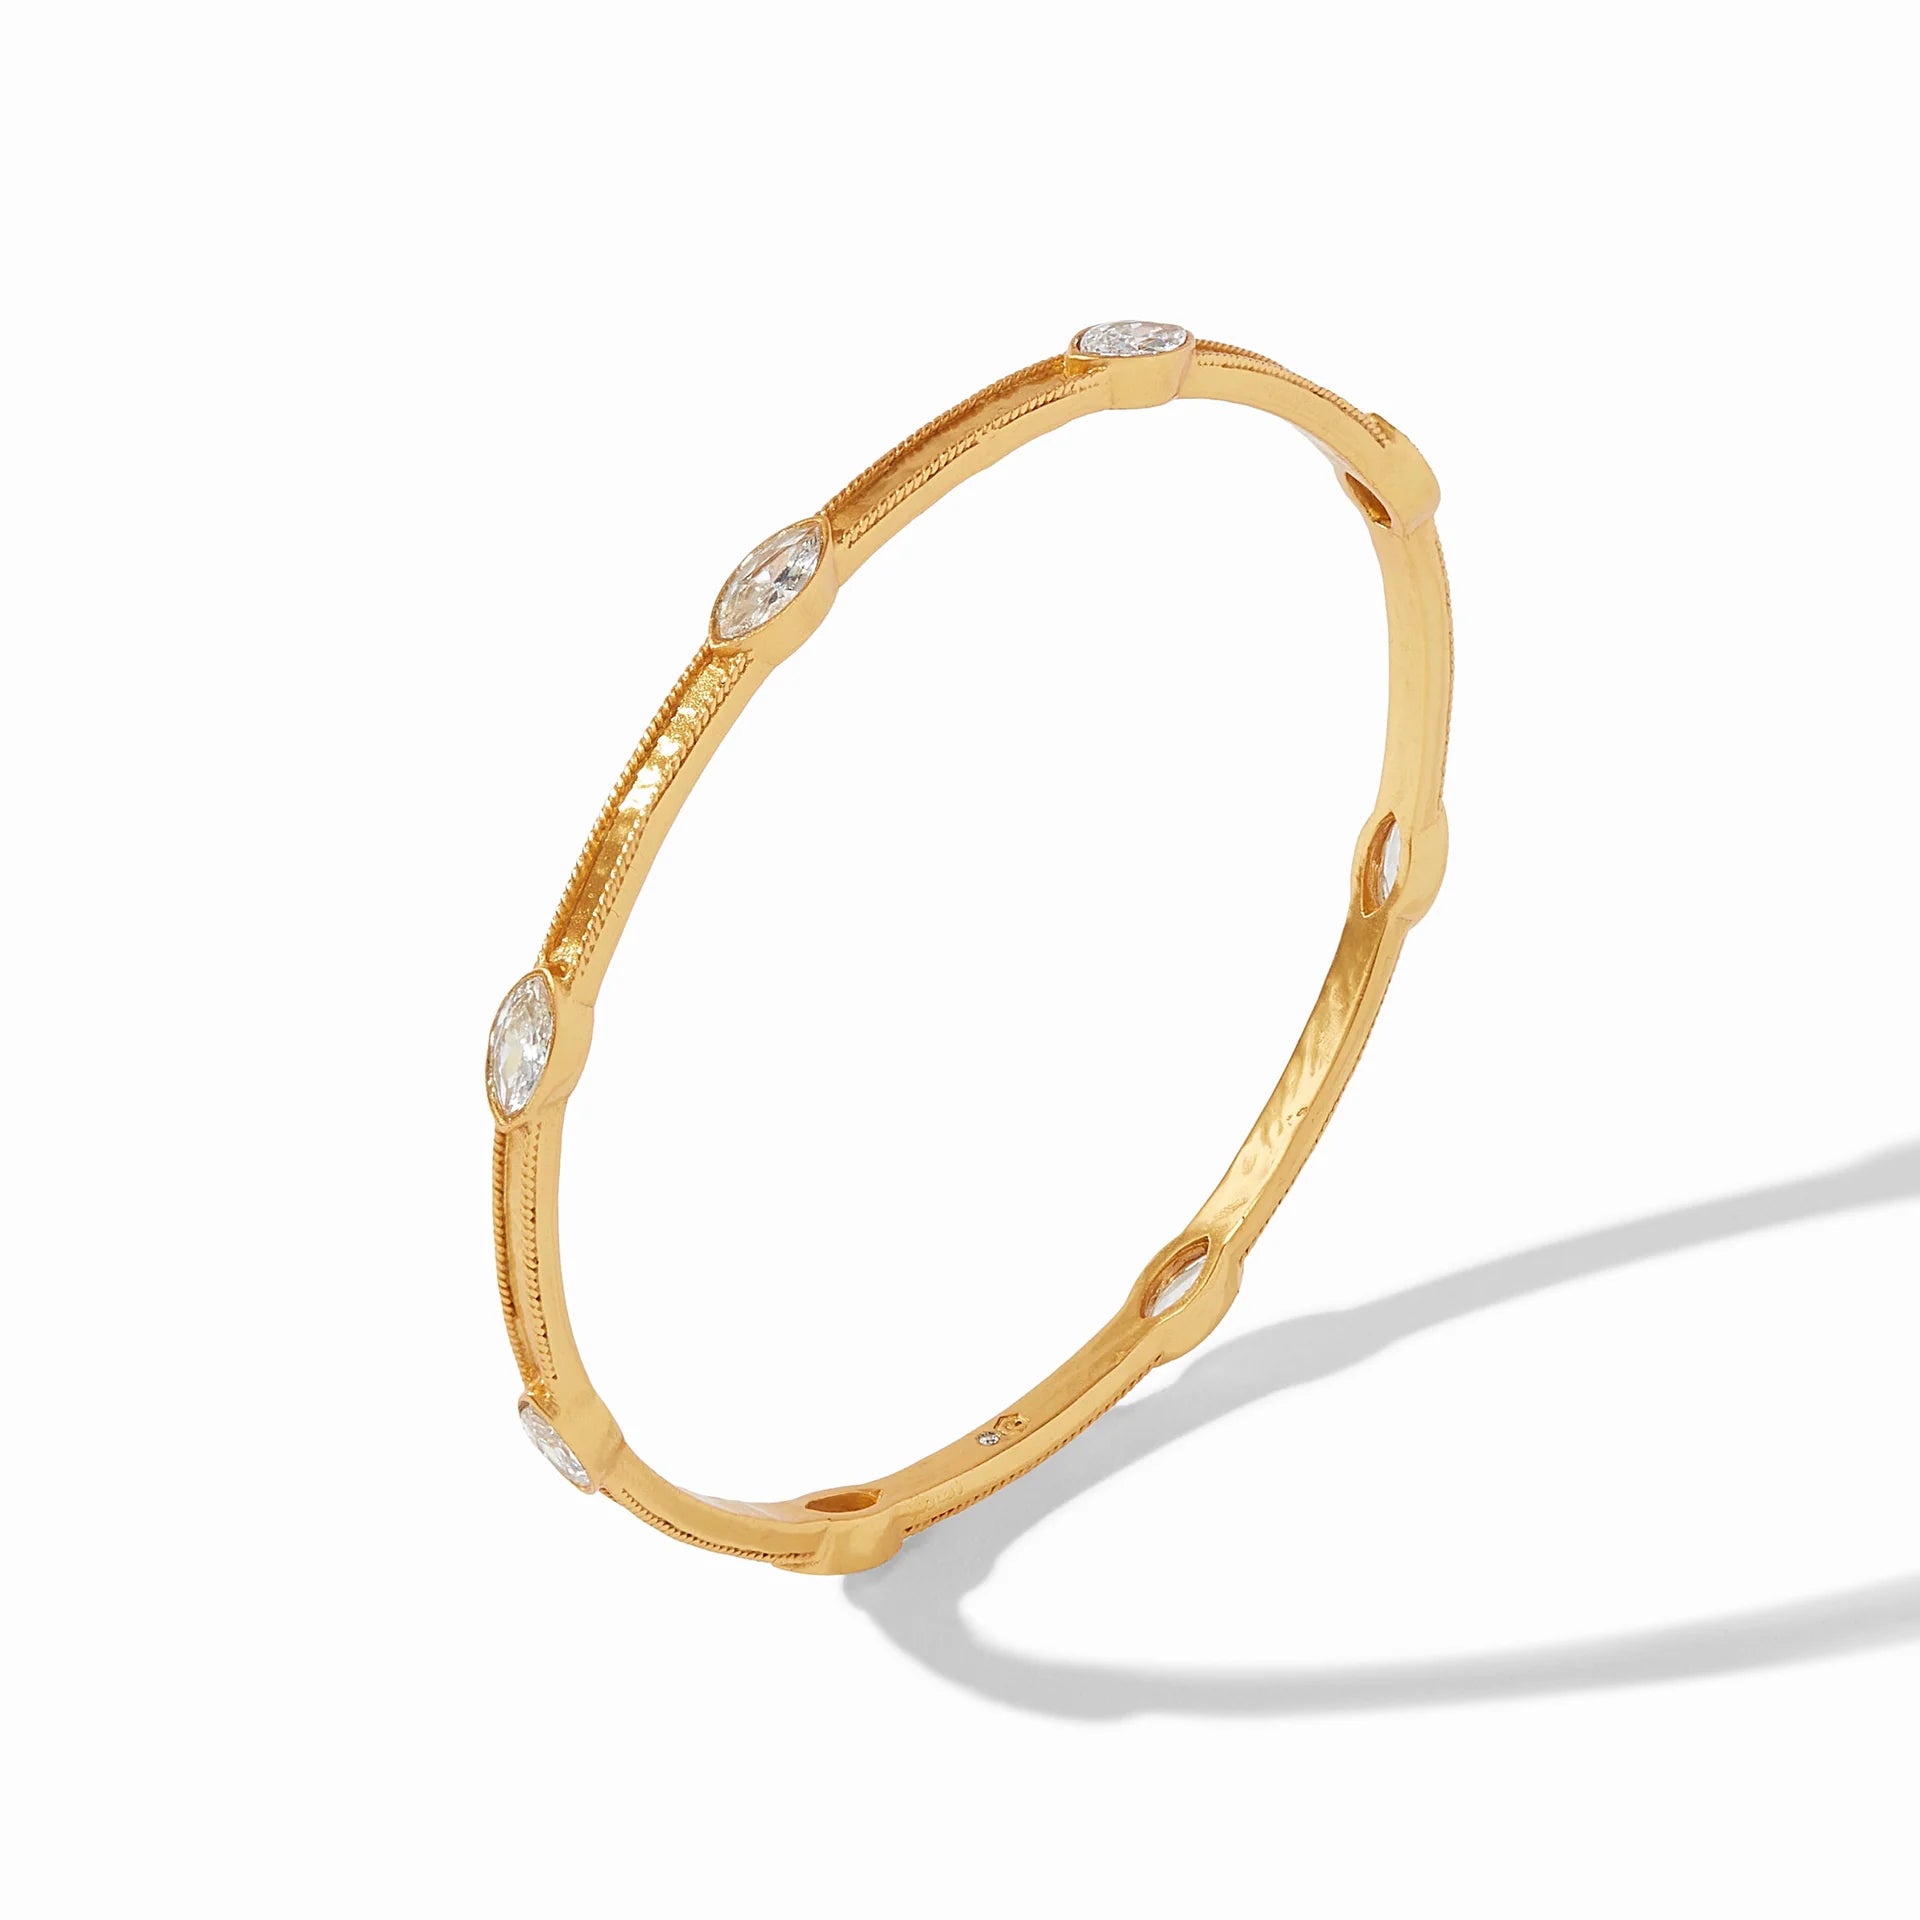 Julie Vos 24K Gold Plated Monaco Bangle Bracelet with Cubic Zirconia, Medium